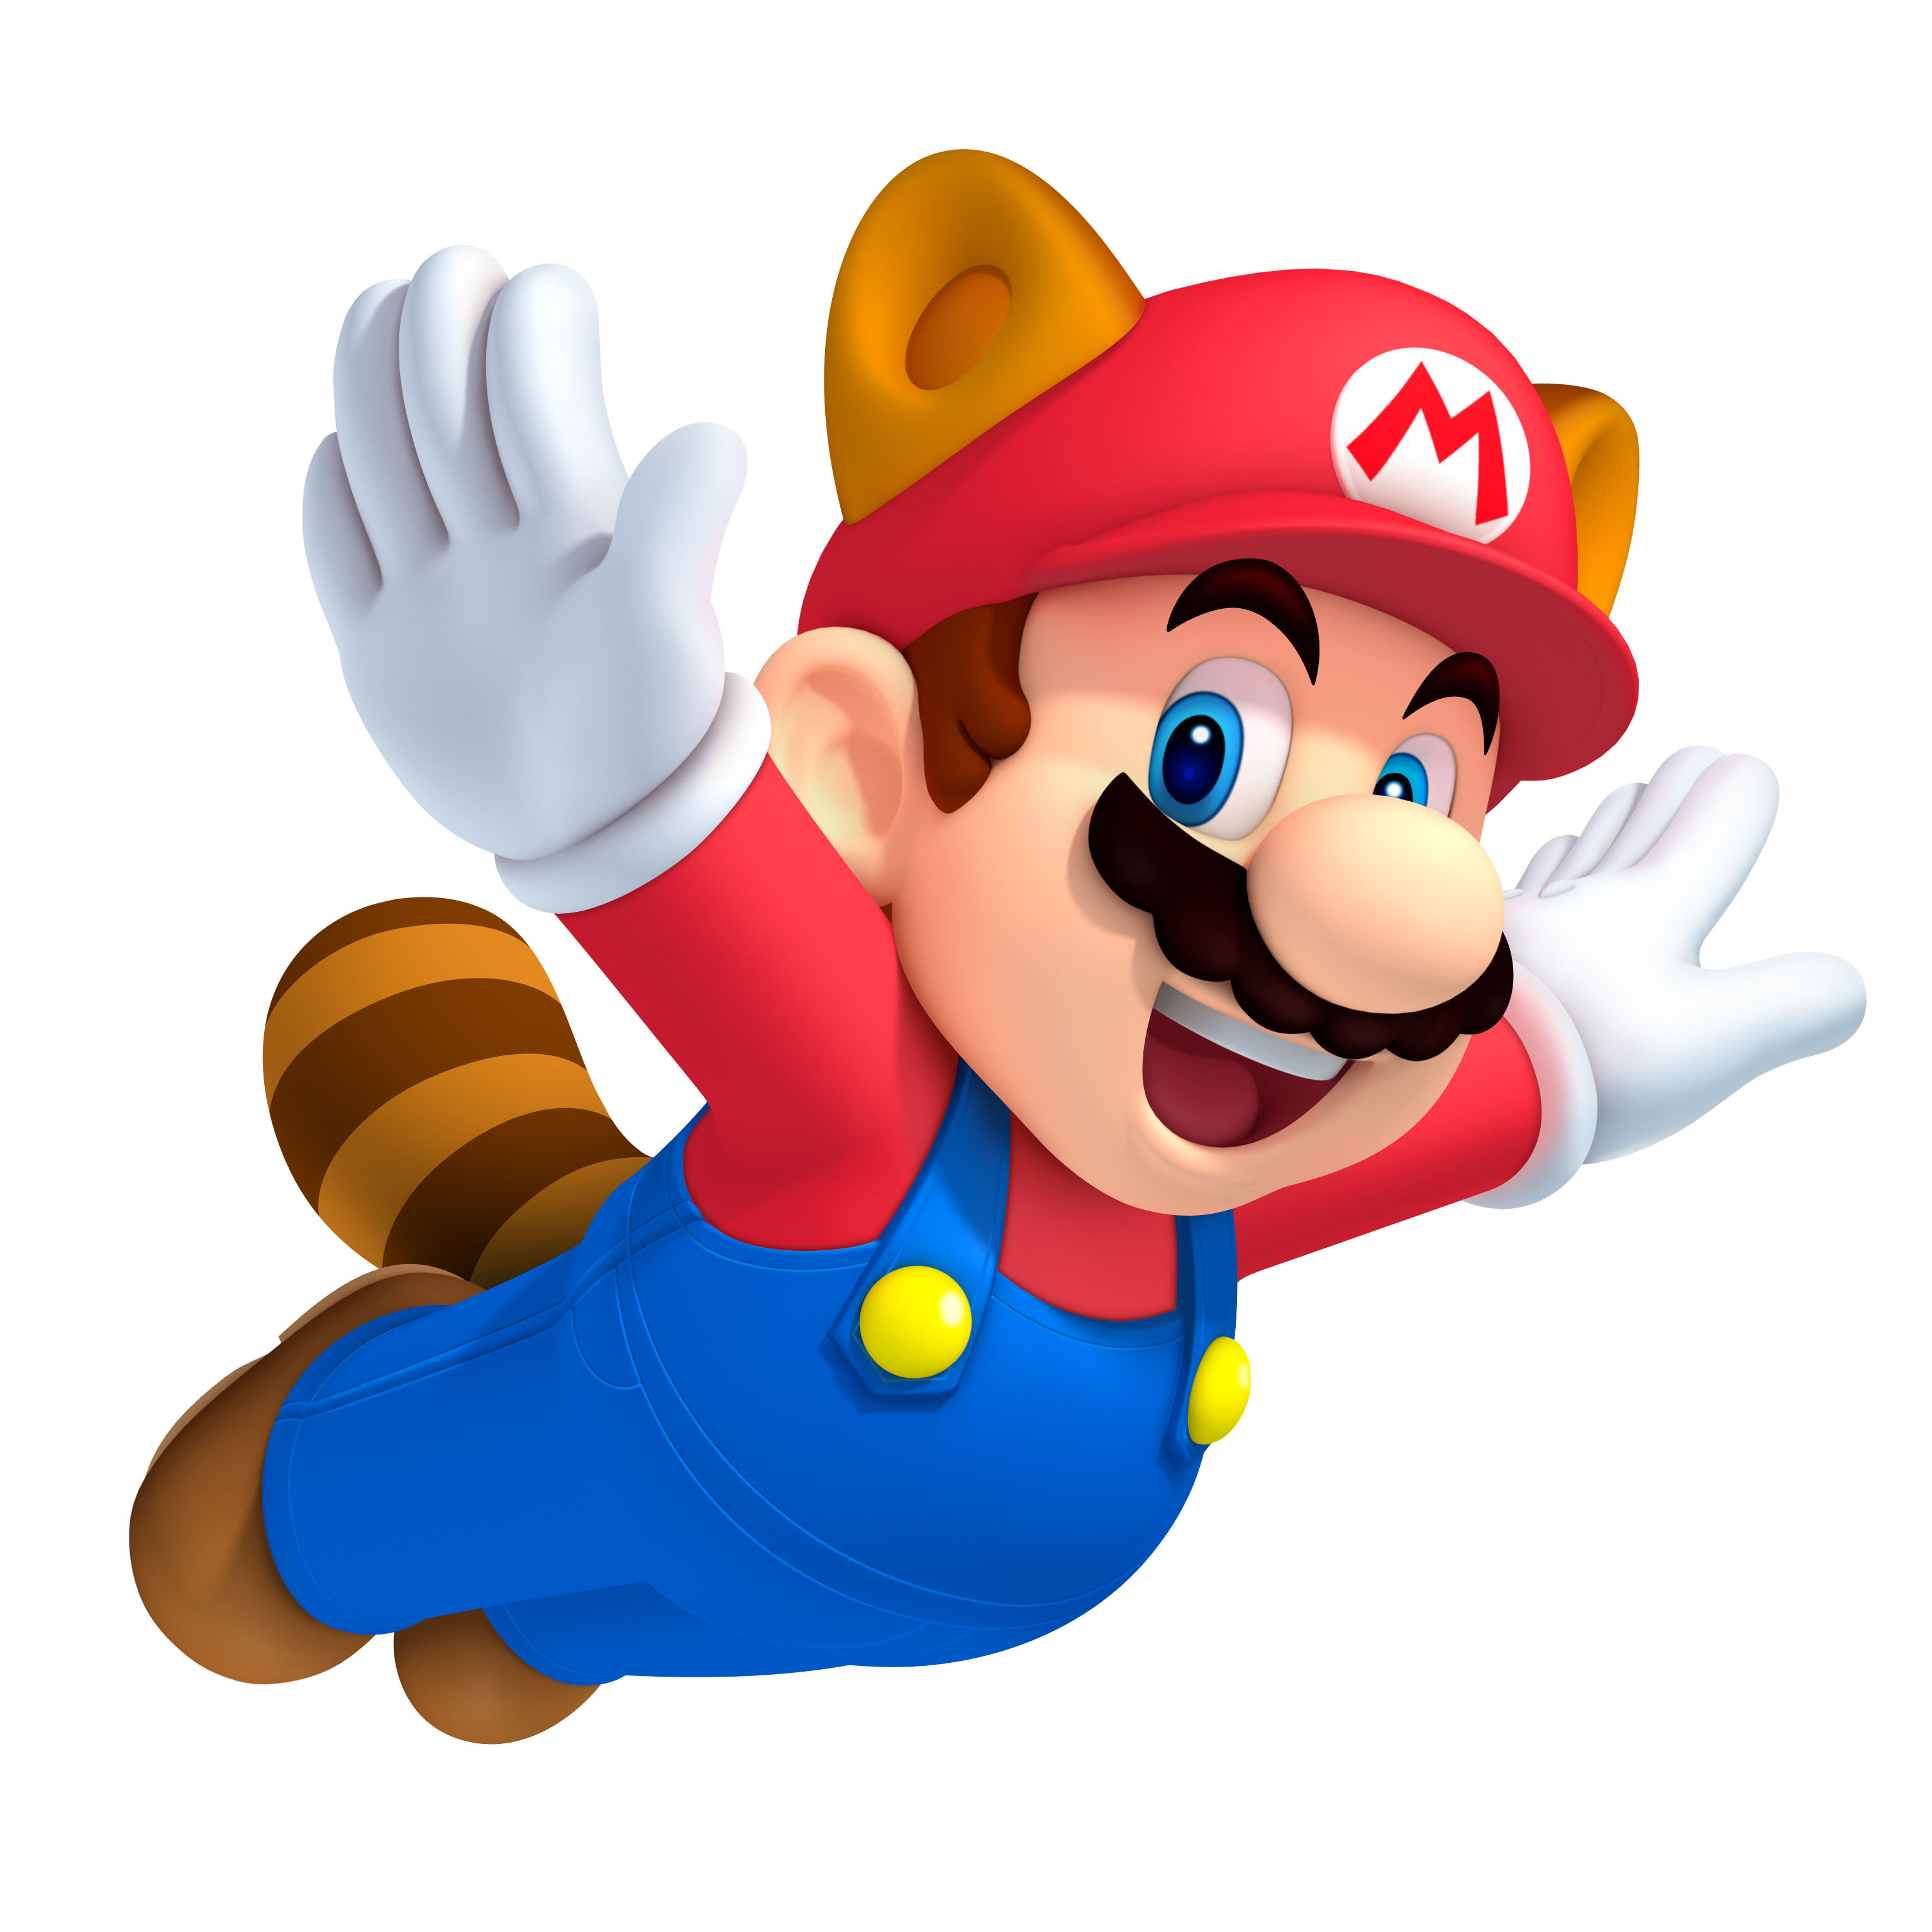 Mario bros x. Супер Марио. Супер Марио БРОС. Супер Марио БРОС Марио. Марио персонажи.